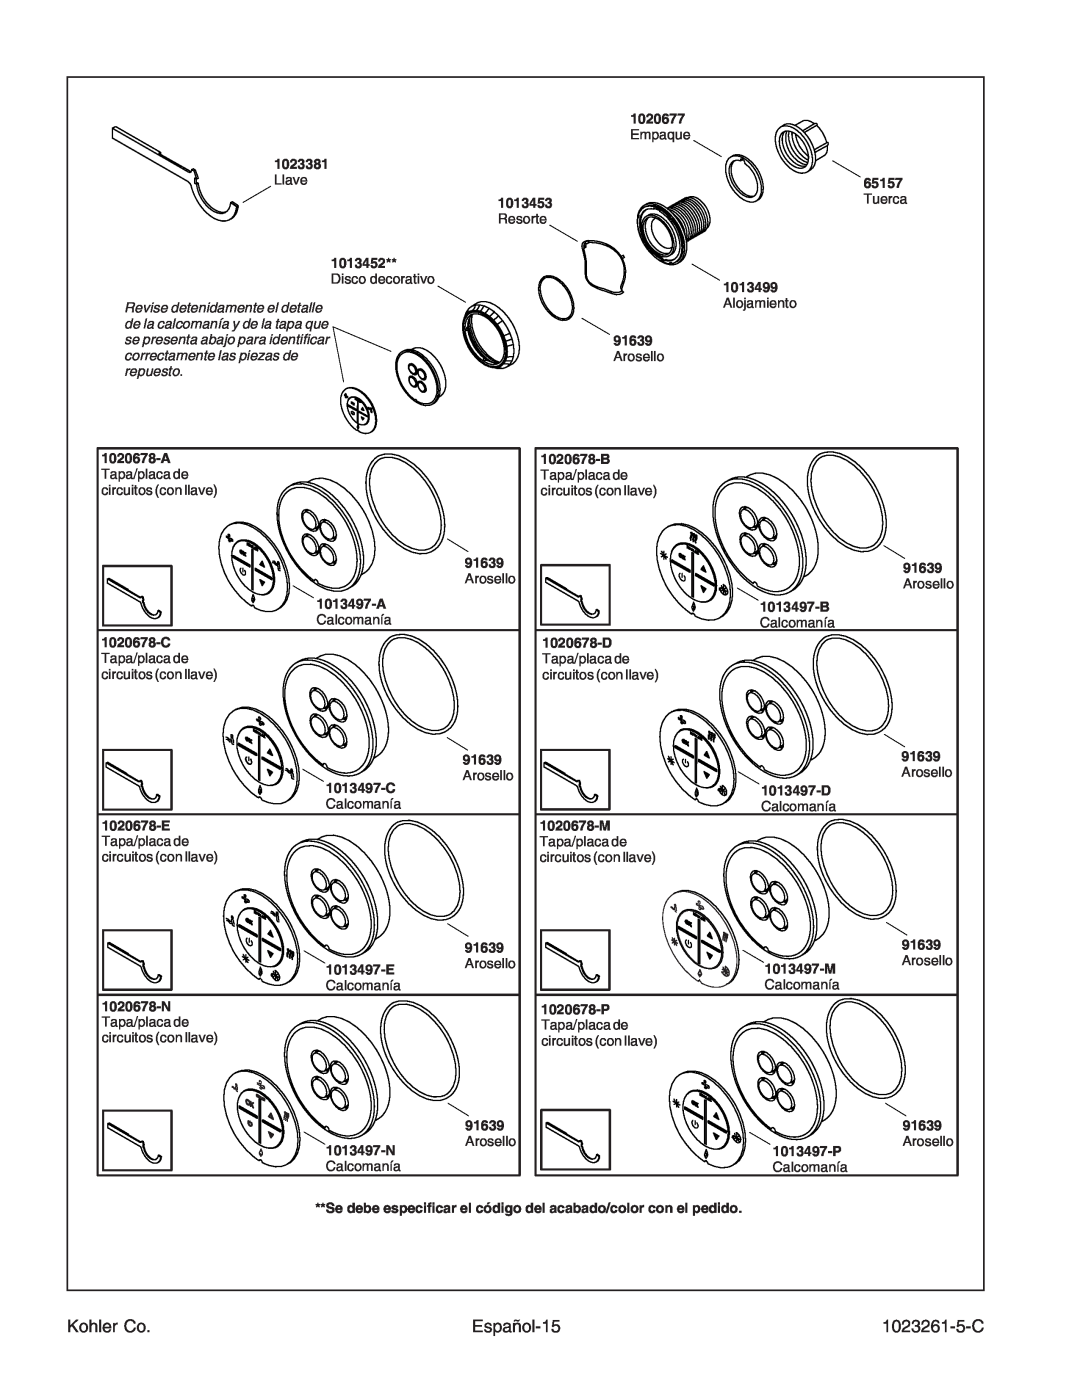 Kohler K-1110-CT manual A Tapa/placa de circuitos con llave 